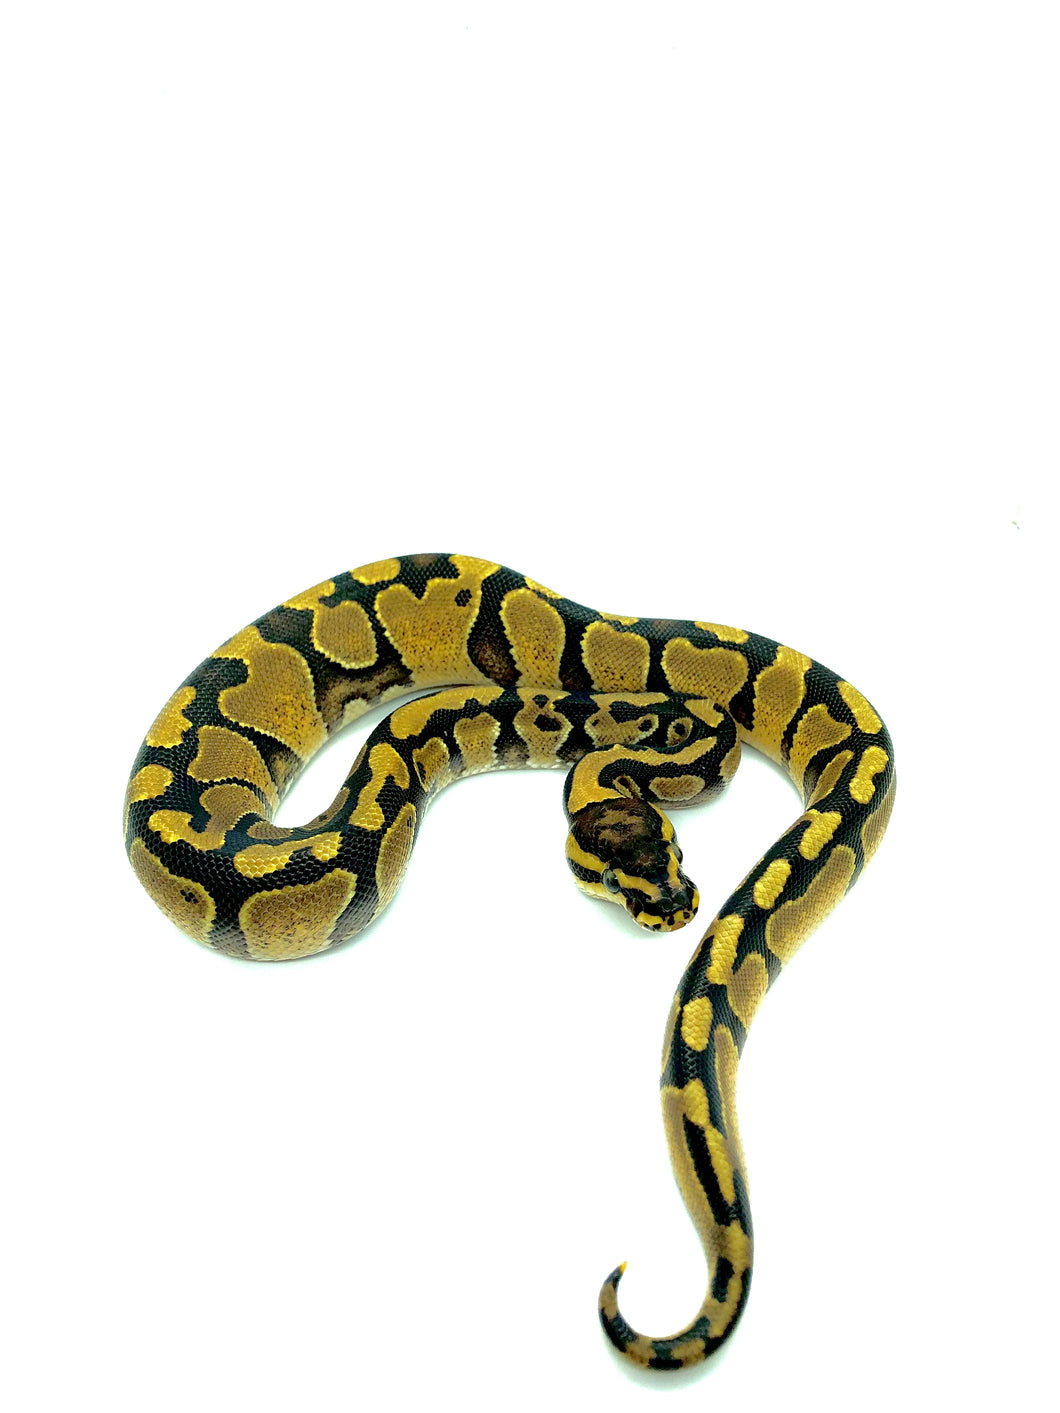 Enchi Yellowbelly or Gravel poss. Phantom Ball Python Female #BPCRF006